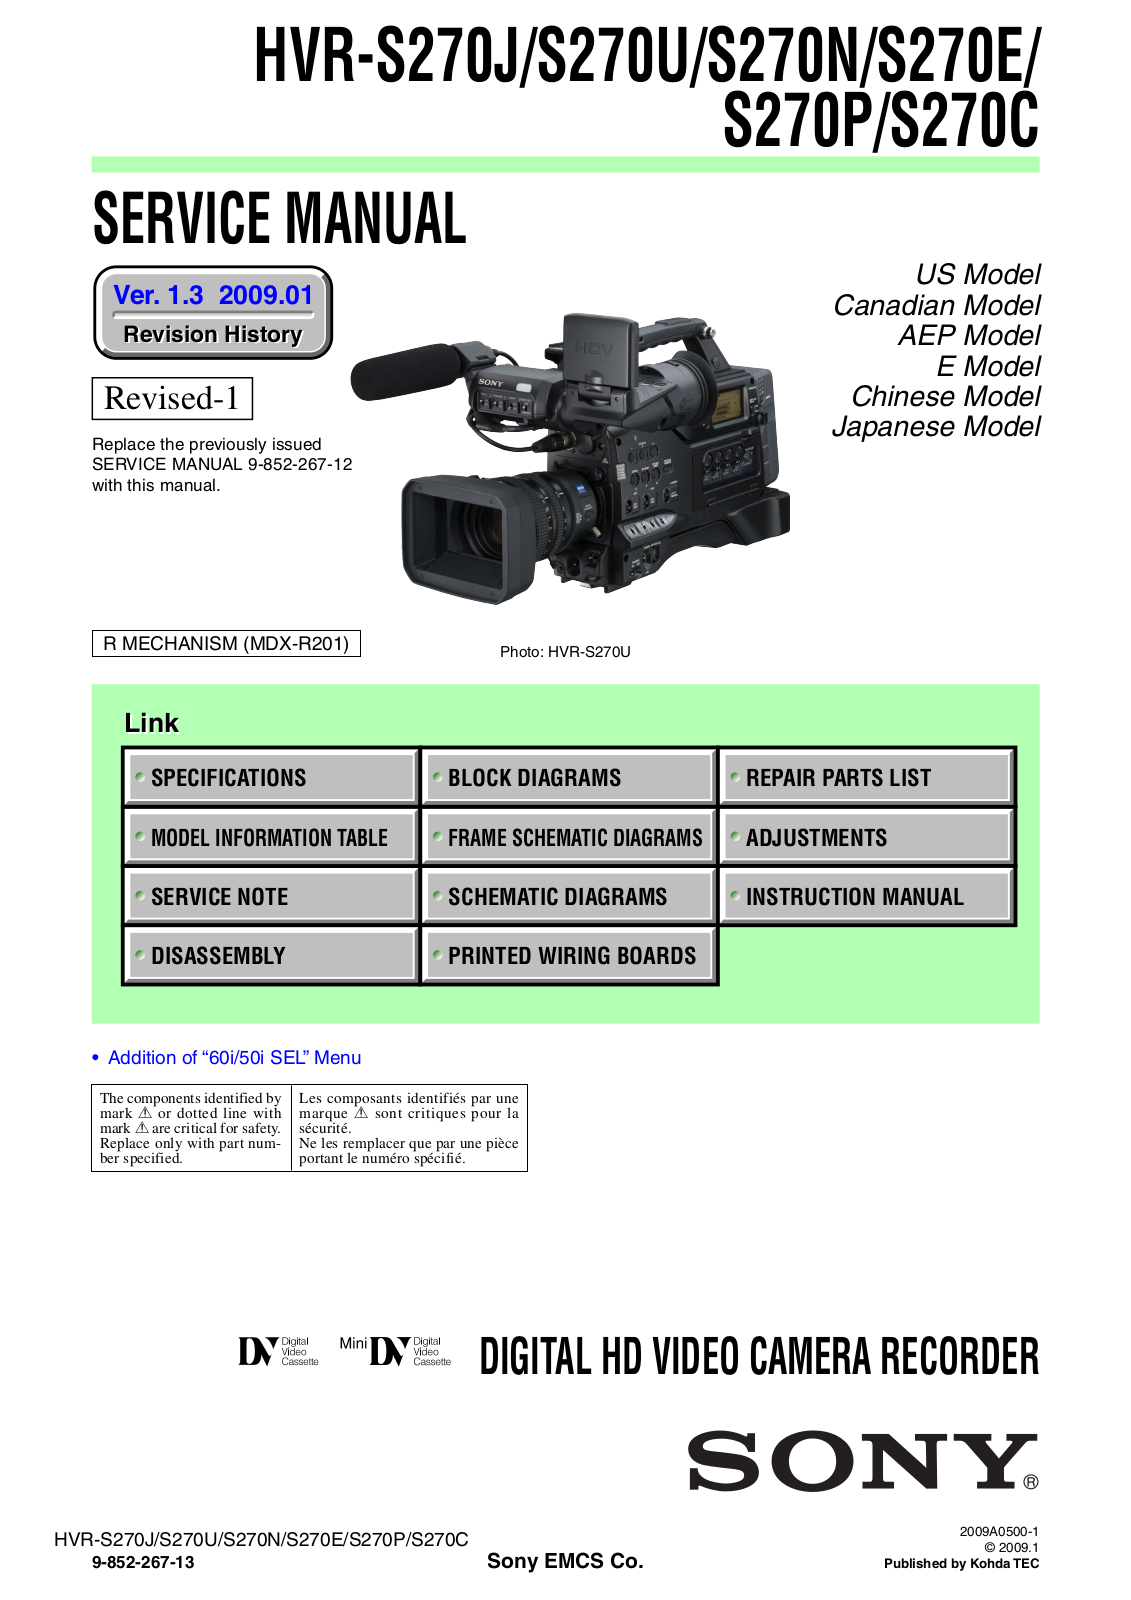 Sony HVR-S270J, HVR-S270U, HVR-S270N, HVR-S270E, HVR-S270P Service manual